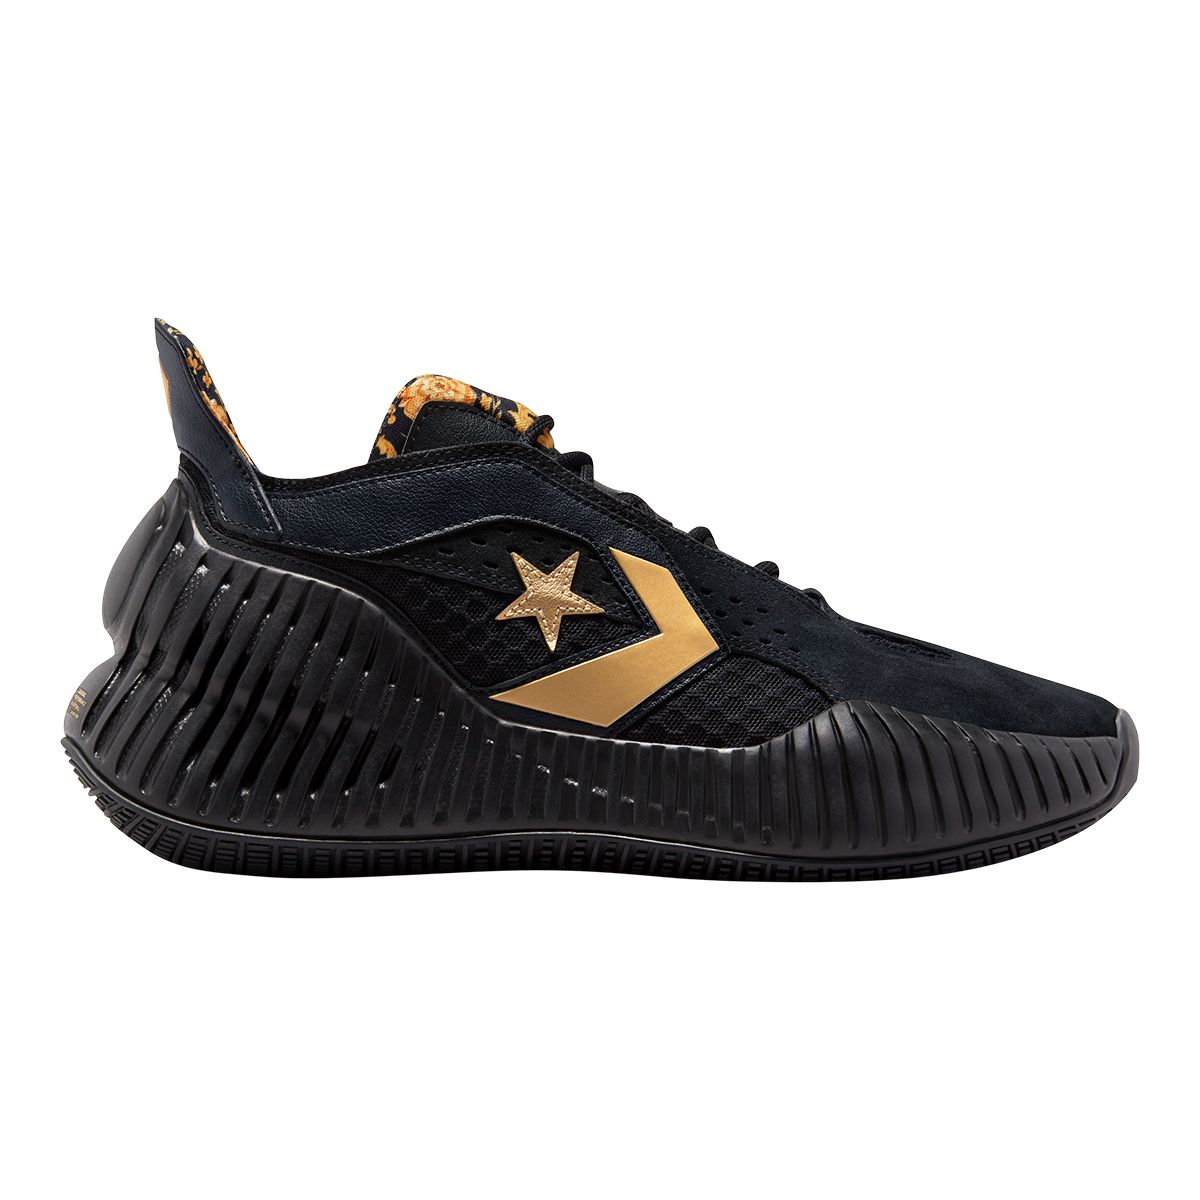 Converse Men's/Women's All Star CX Basketball Shoes